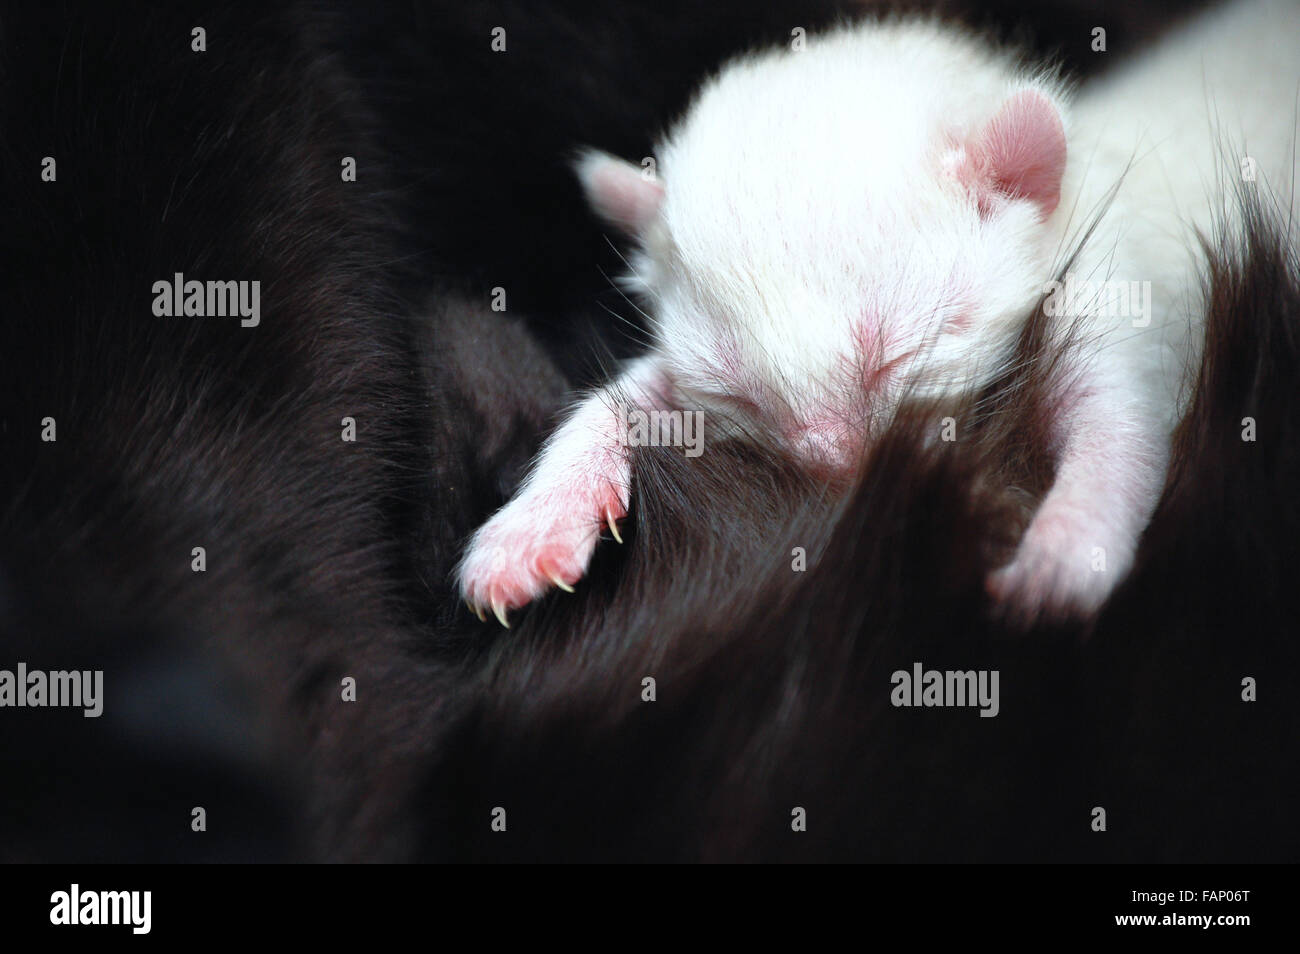 Newborn kitten at the time of nursing. Illustration of maternity. Stock Photo